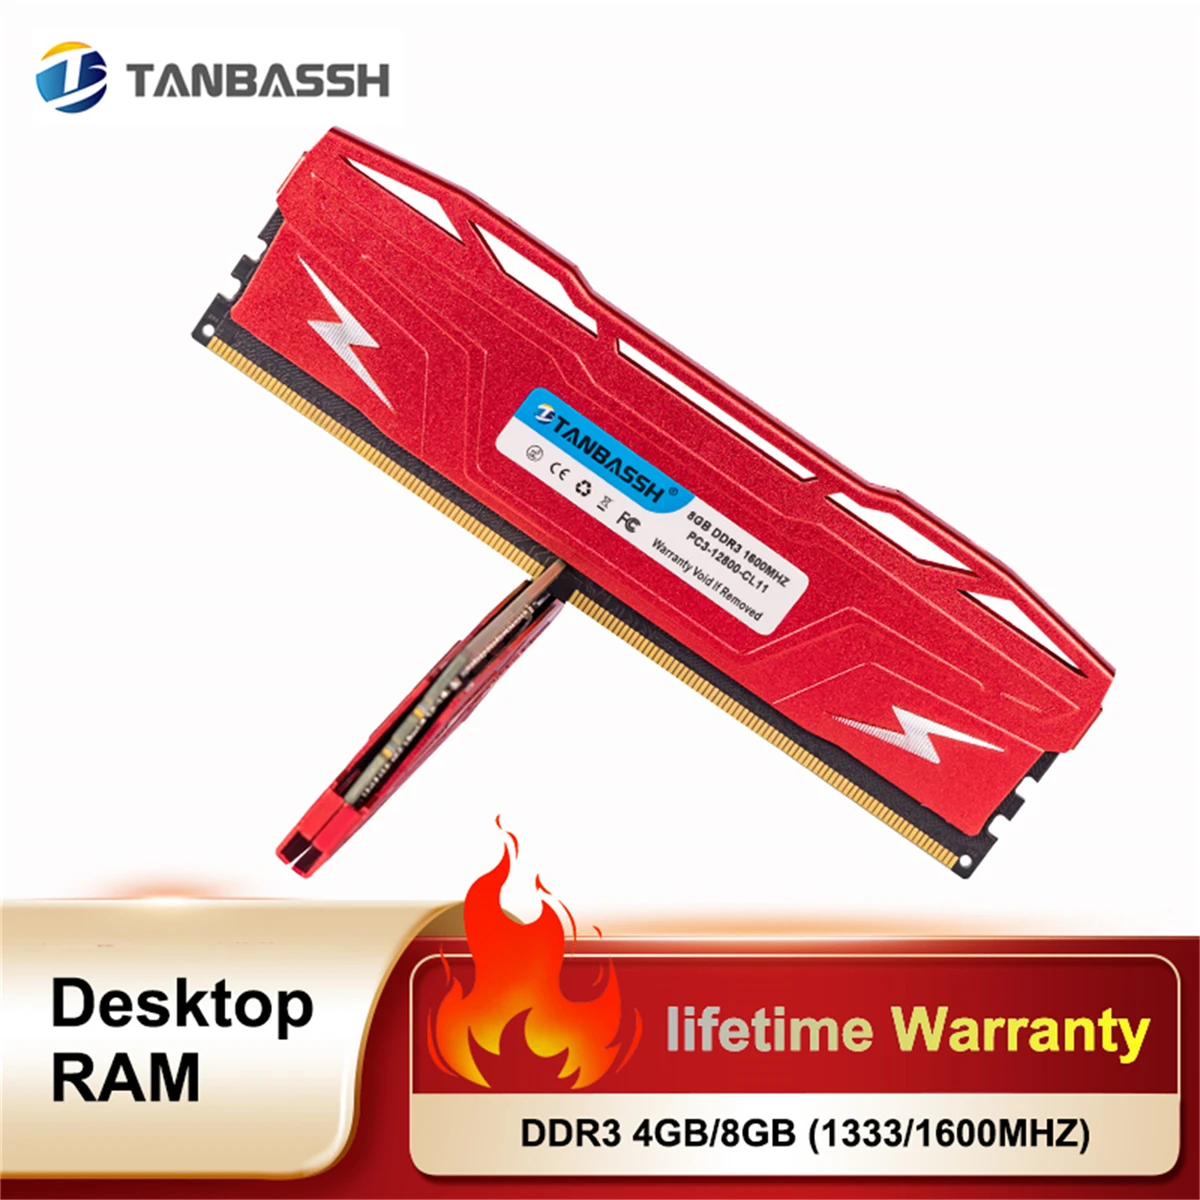 

TANBASSH DDR3 RAM 4GB 8GB Heat Sink Desktop Memory 1333 1600MHz 1.5V 240Pin PC DIMM Rams For Intel AMD All Motherboard